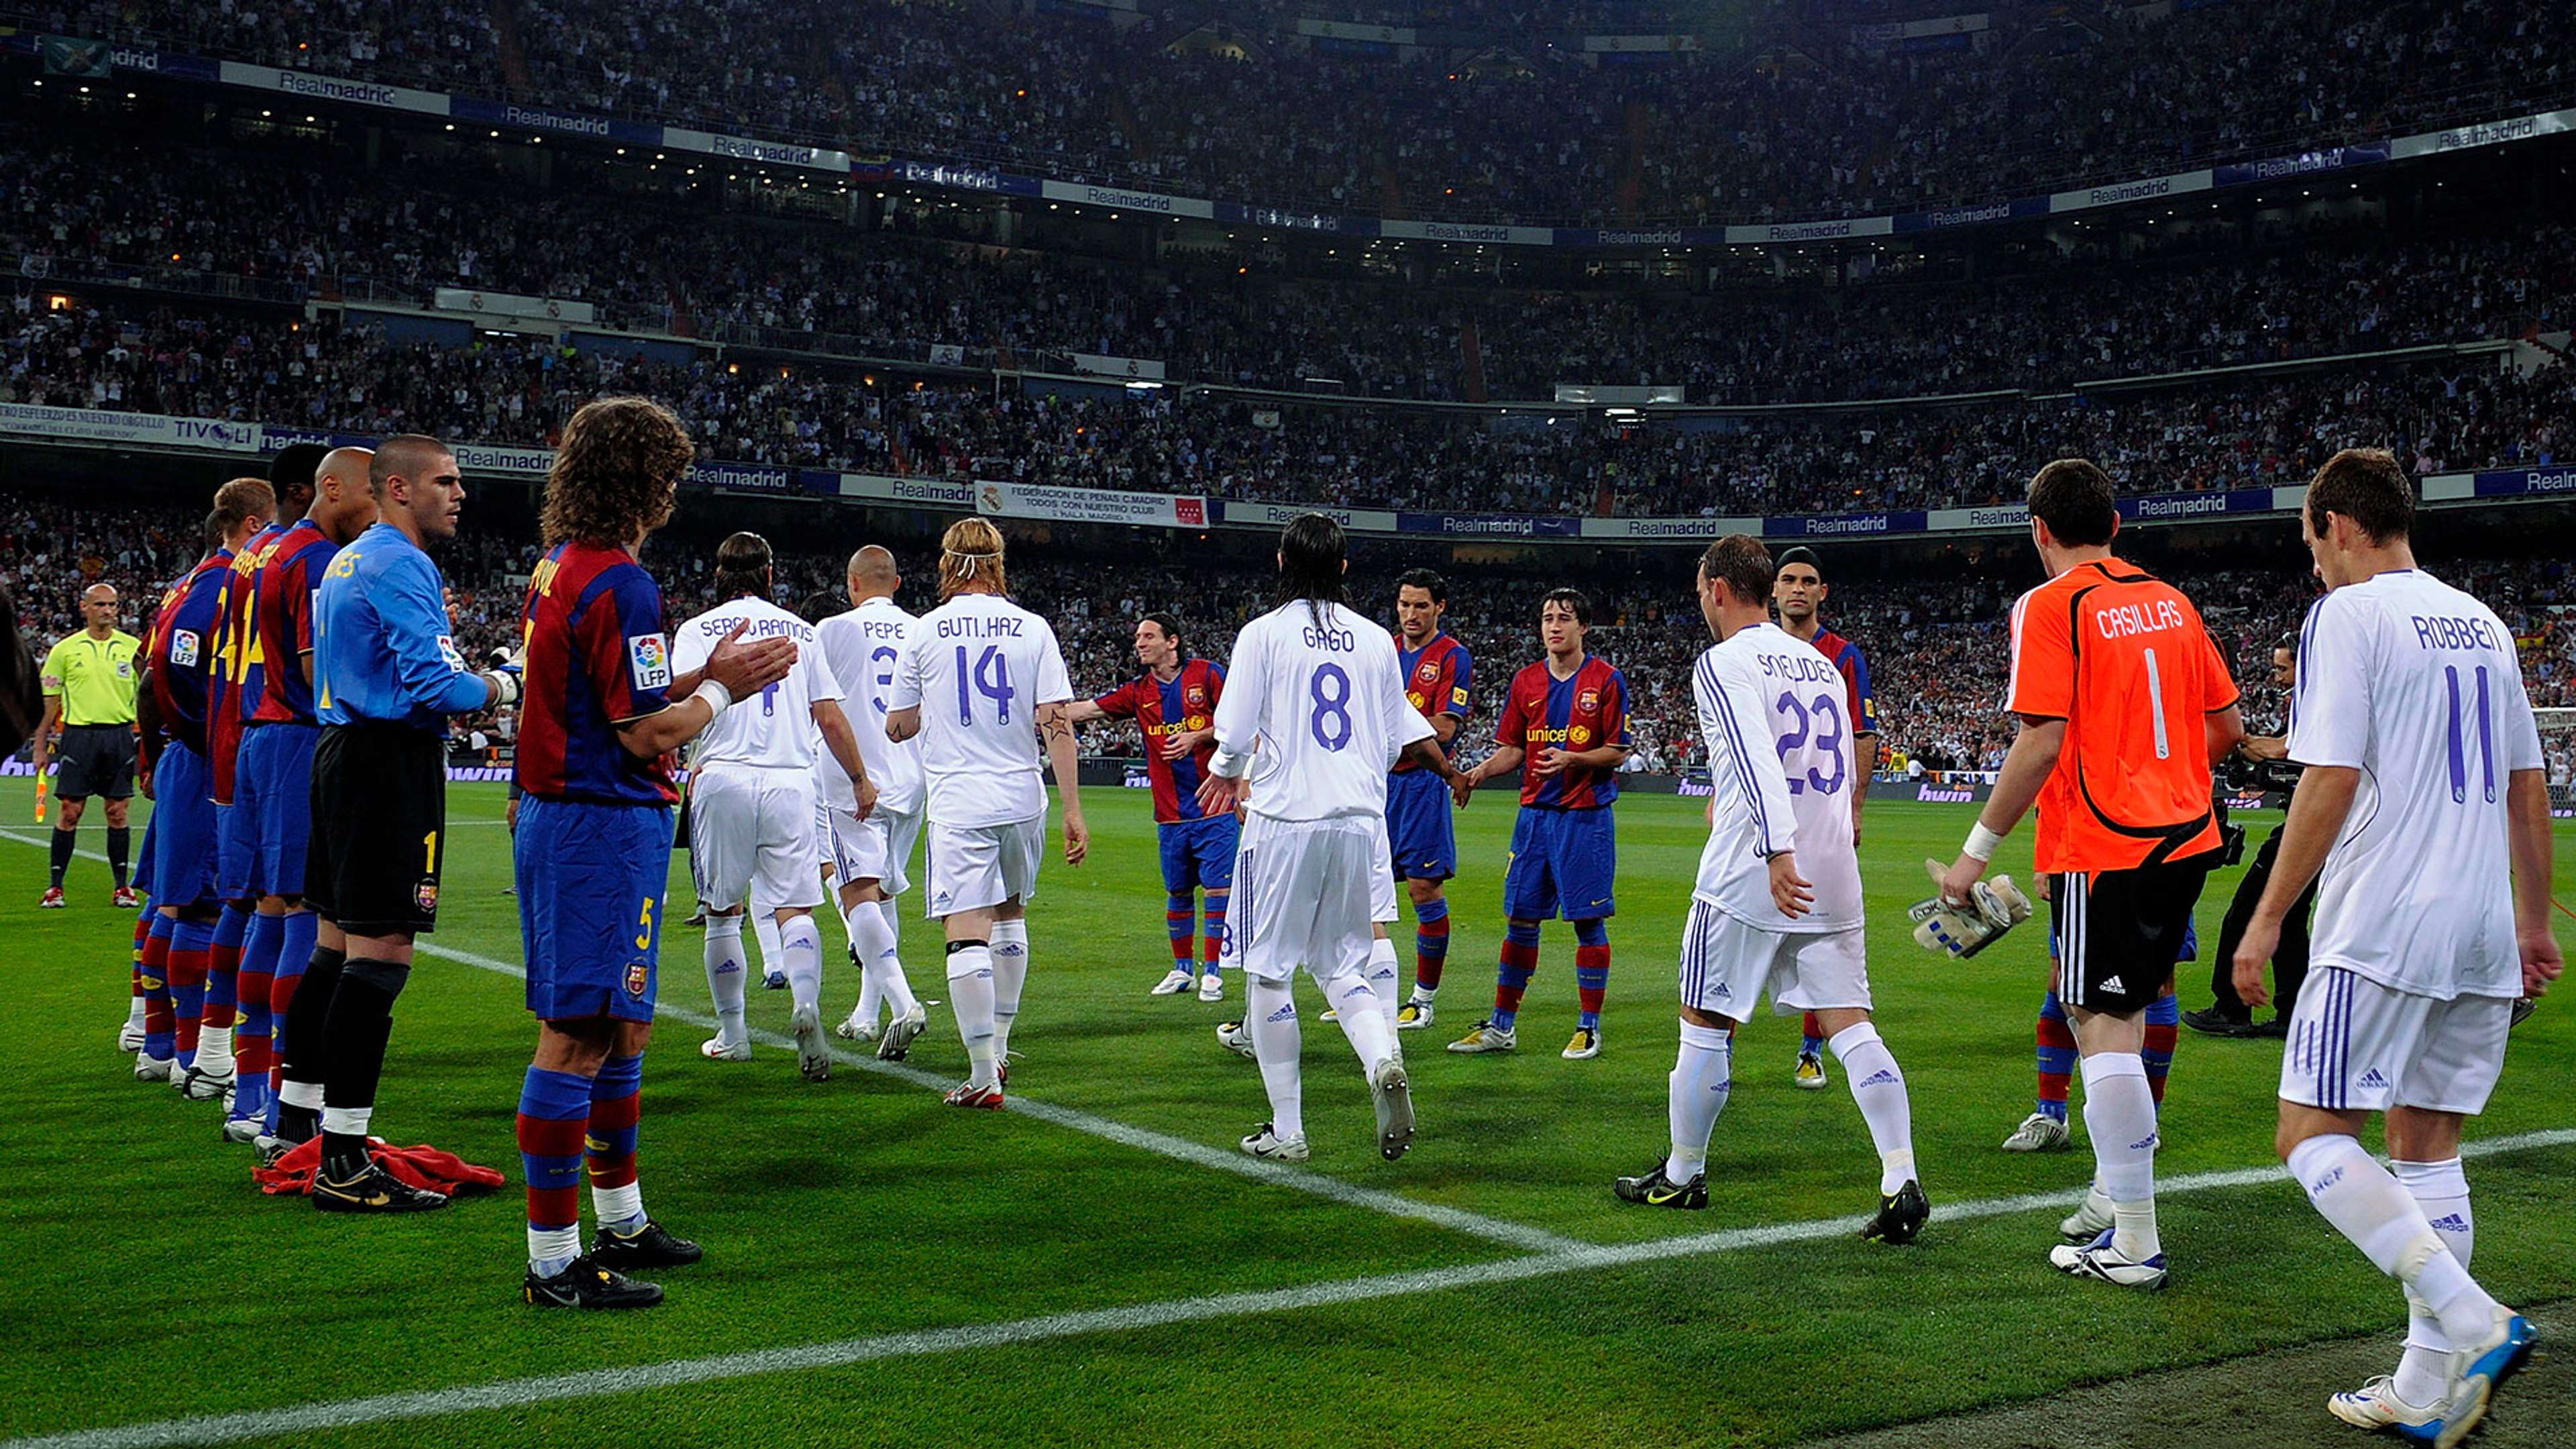 Barcelona Real Madrid 2008 Merasim Kitasi